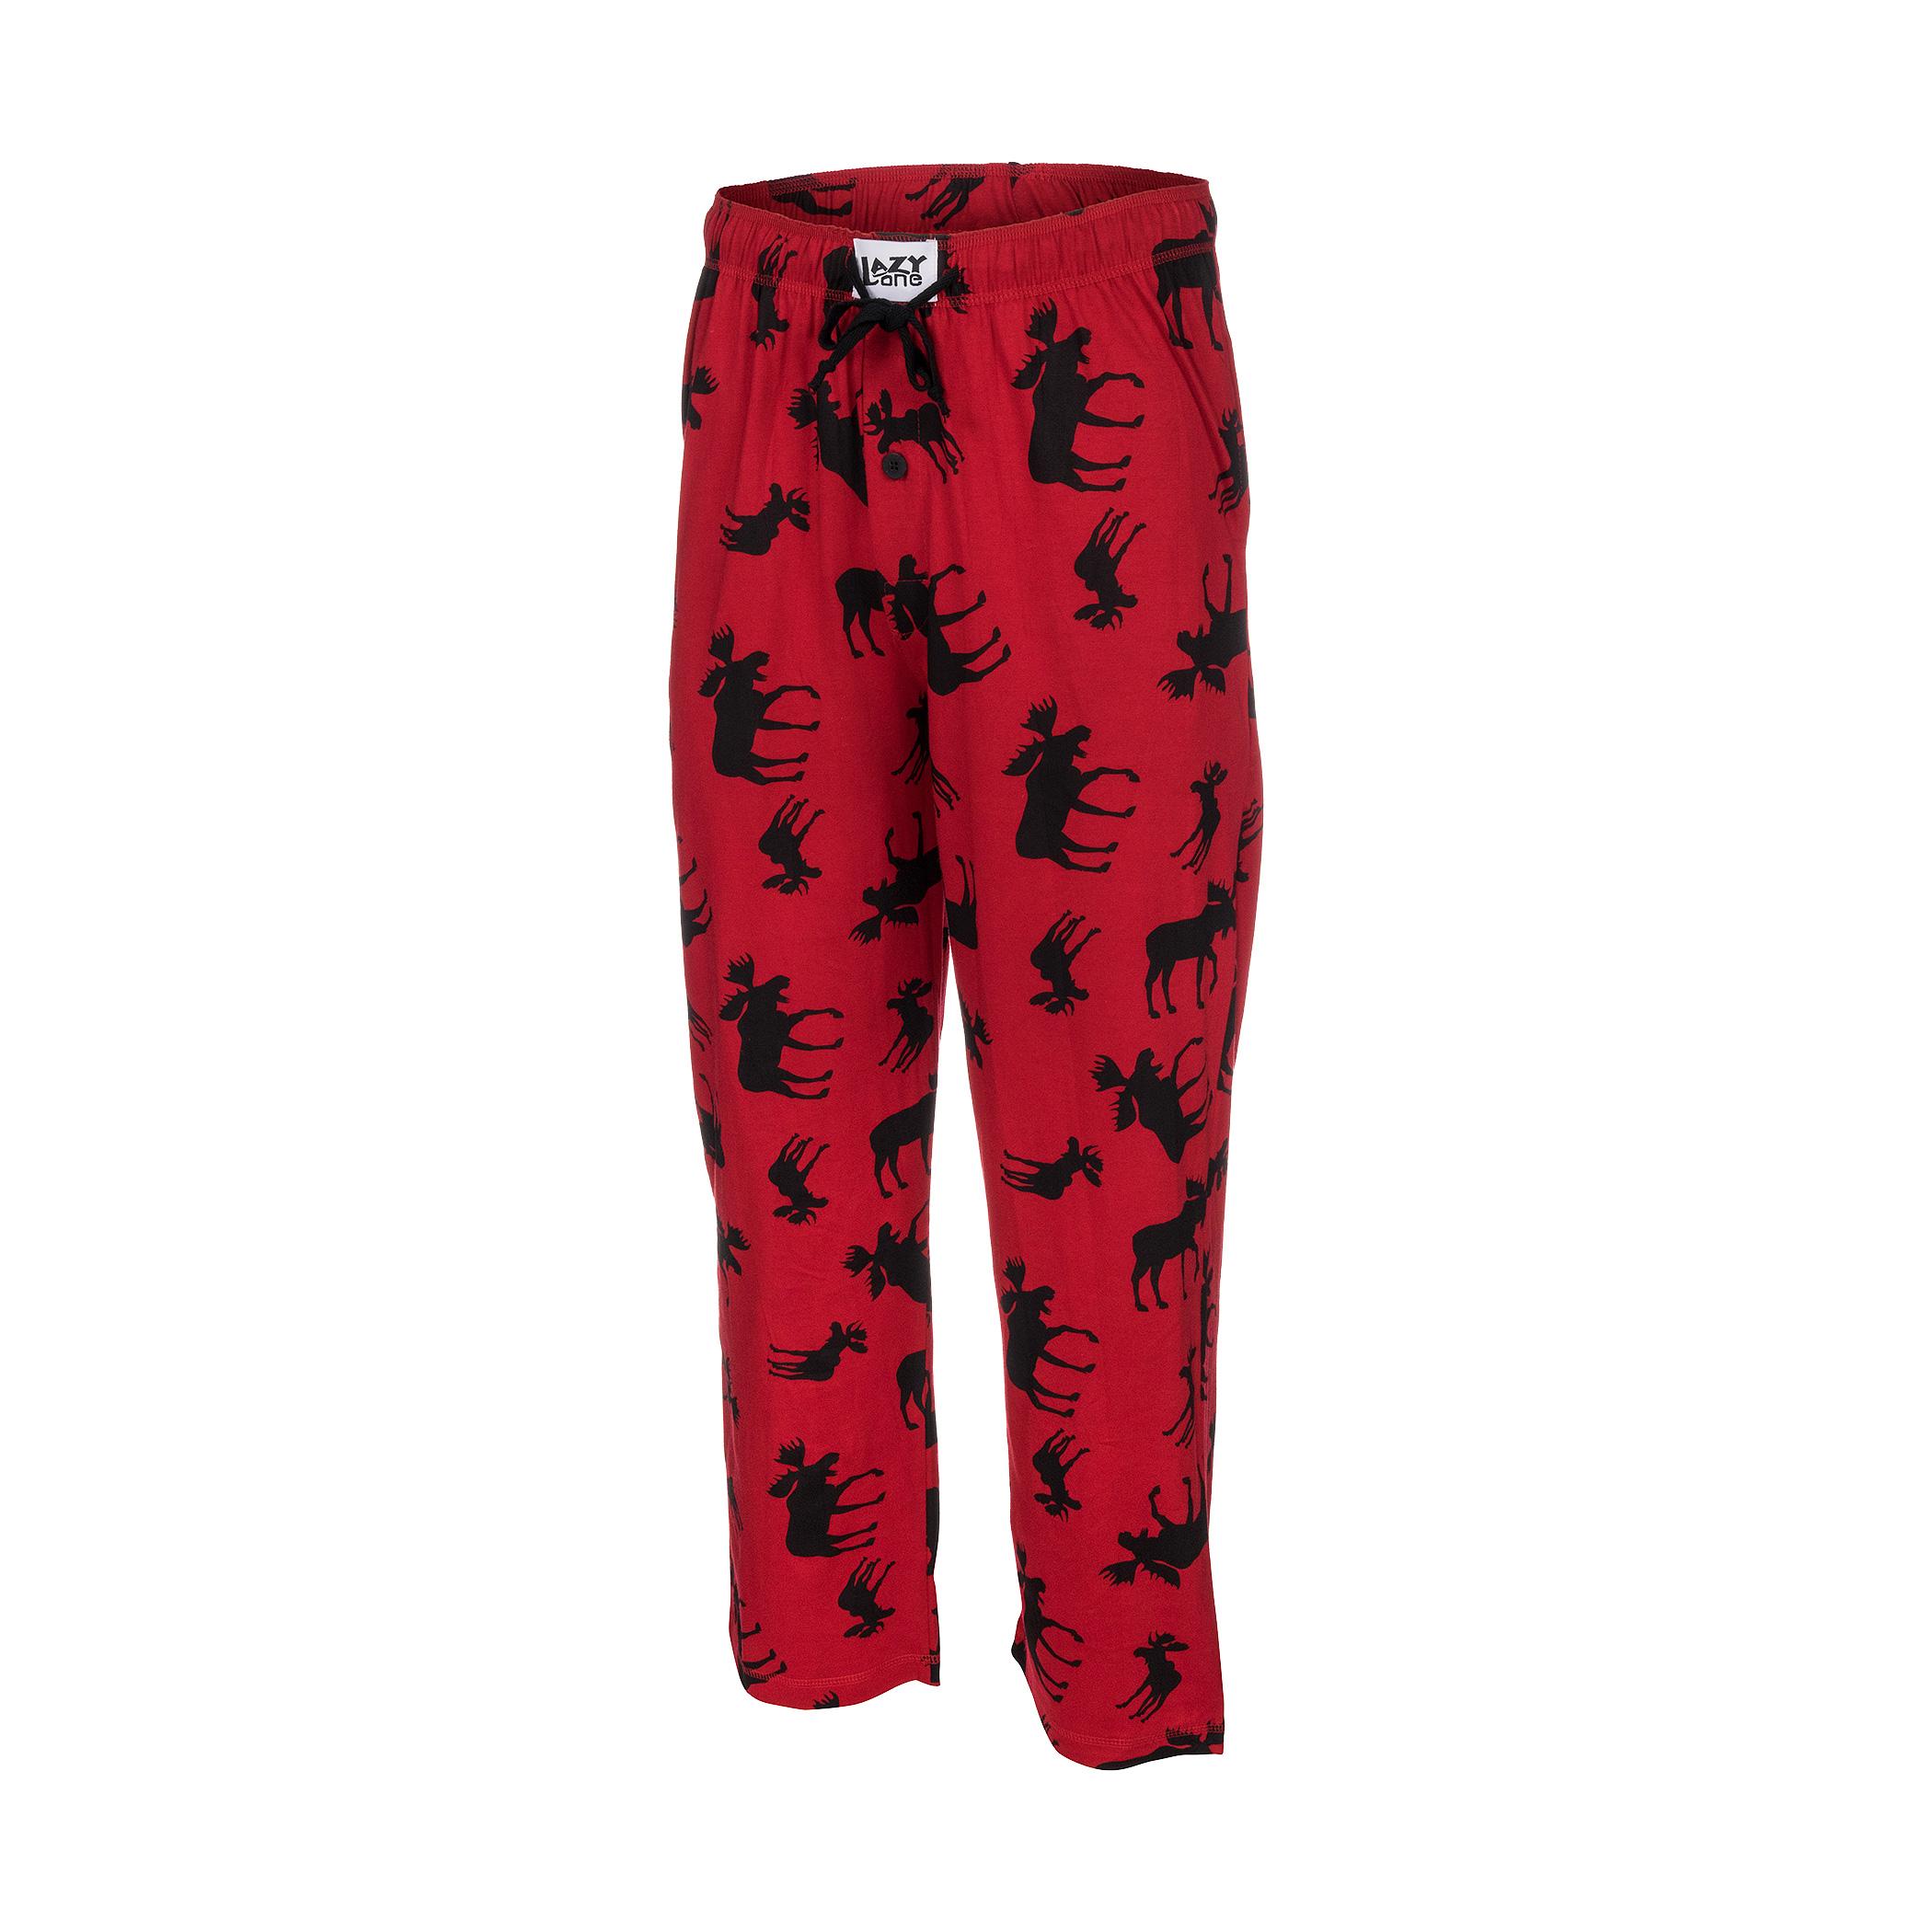 Unisex Pocket Pajama Bottom Red White Black Plaid Cotton Christmas